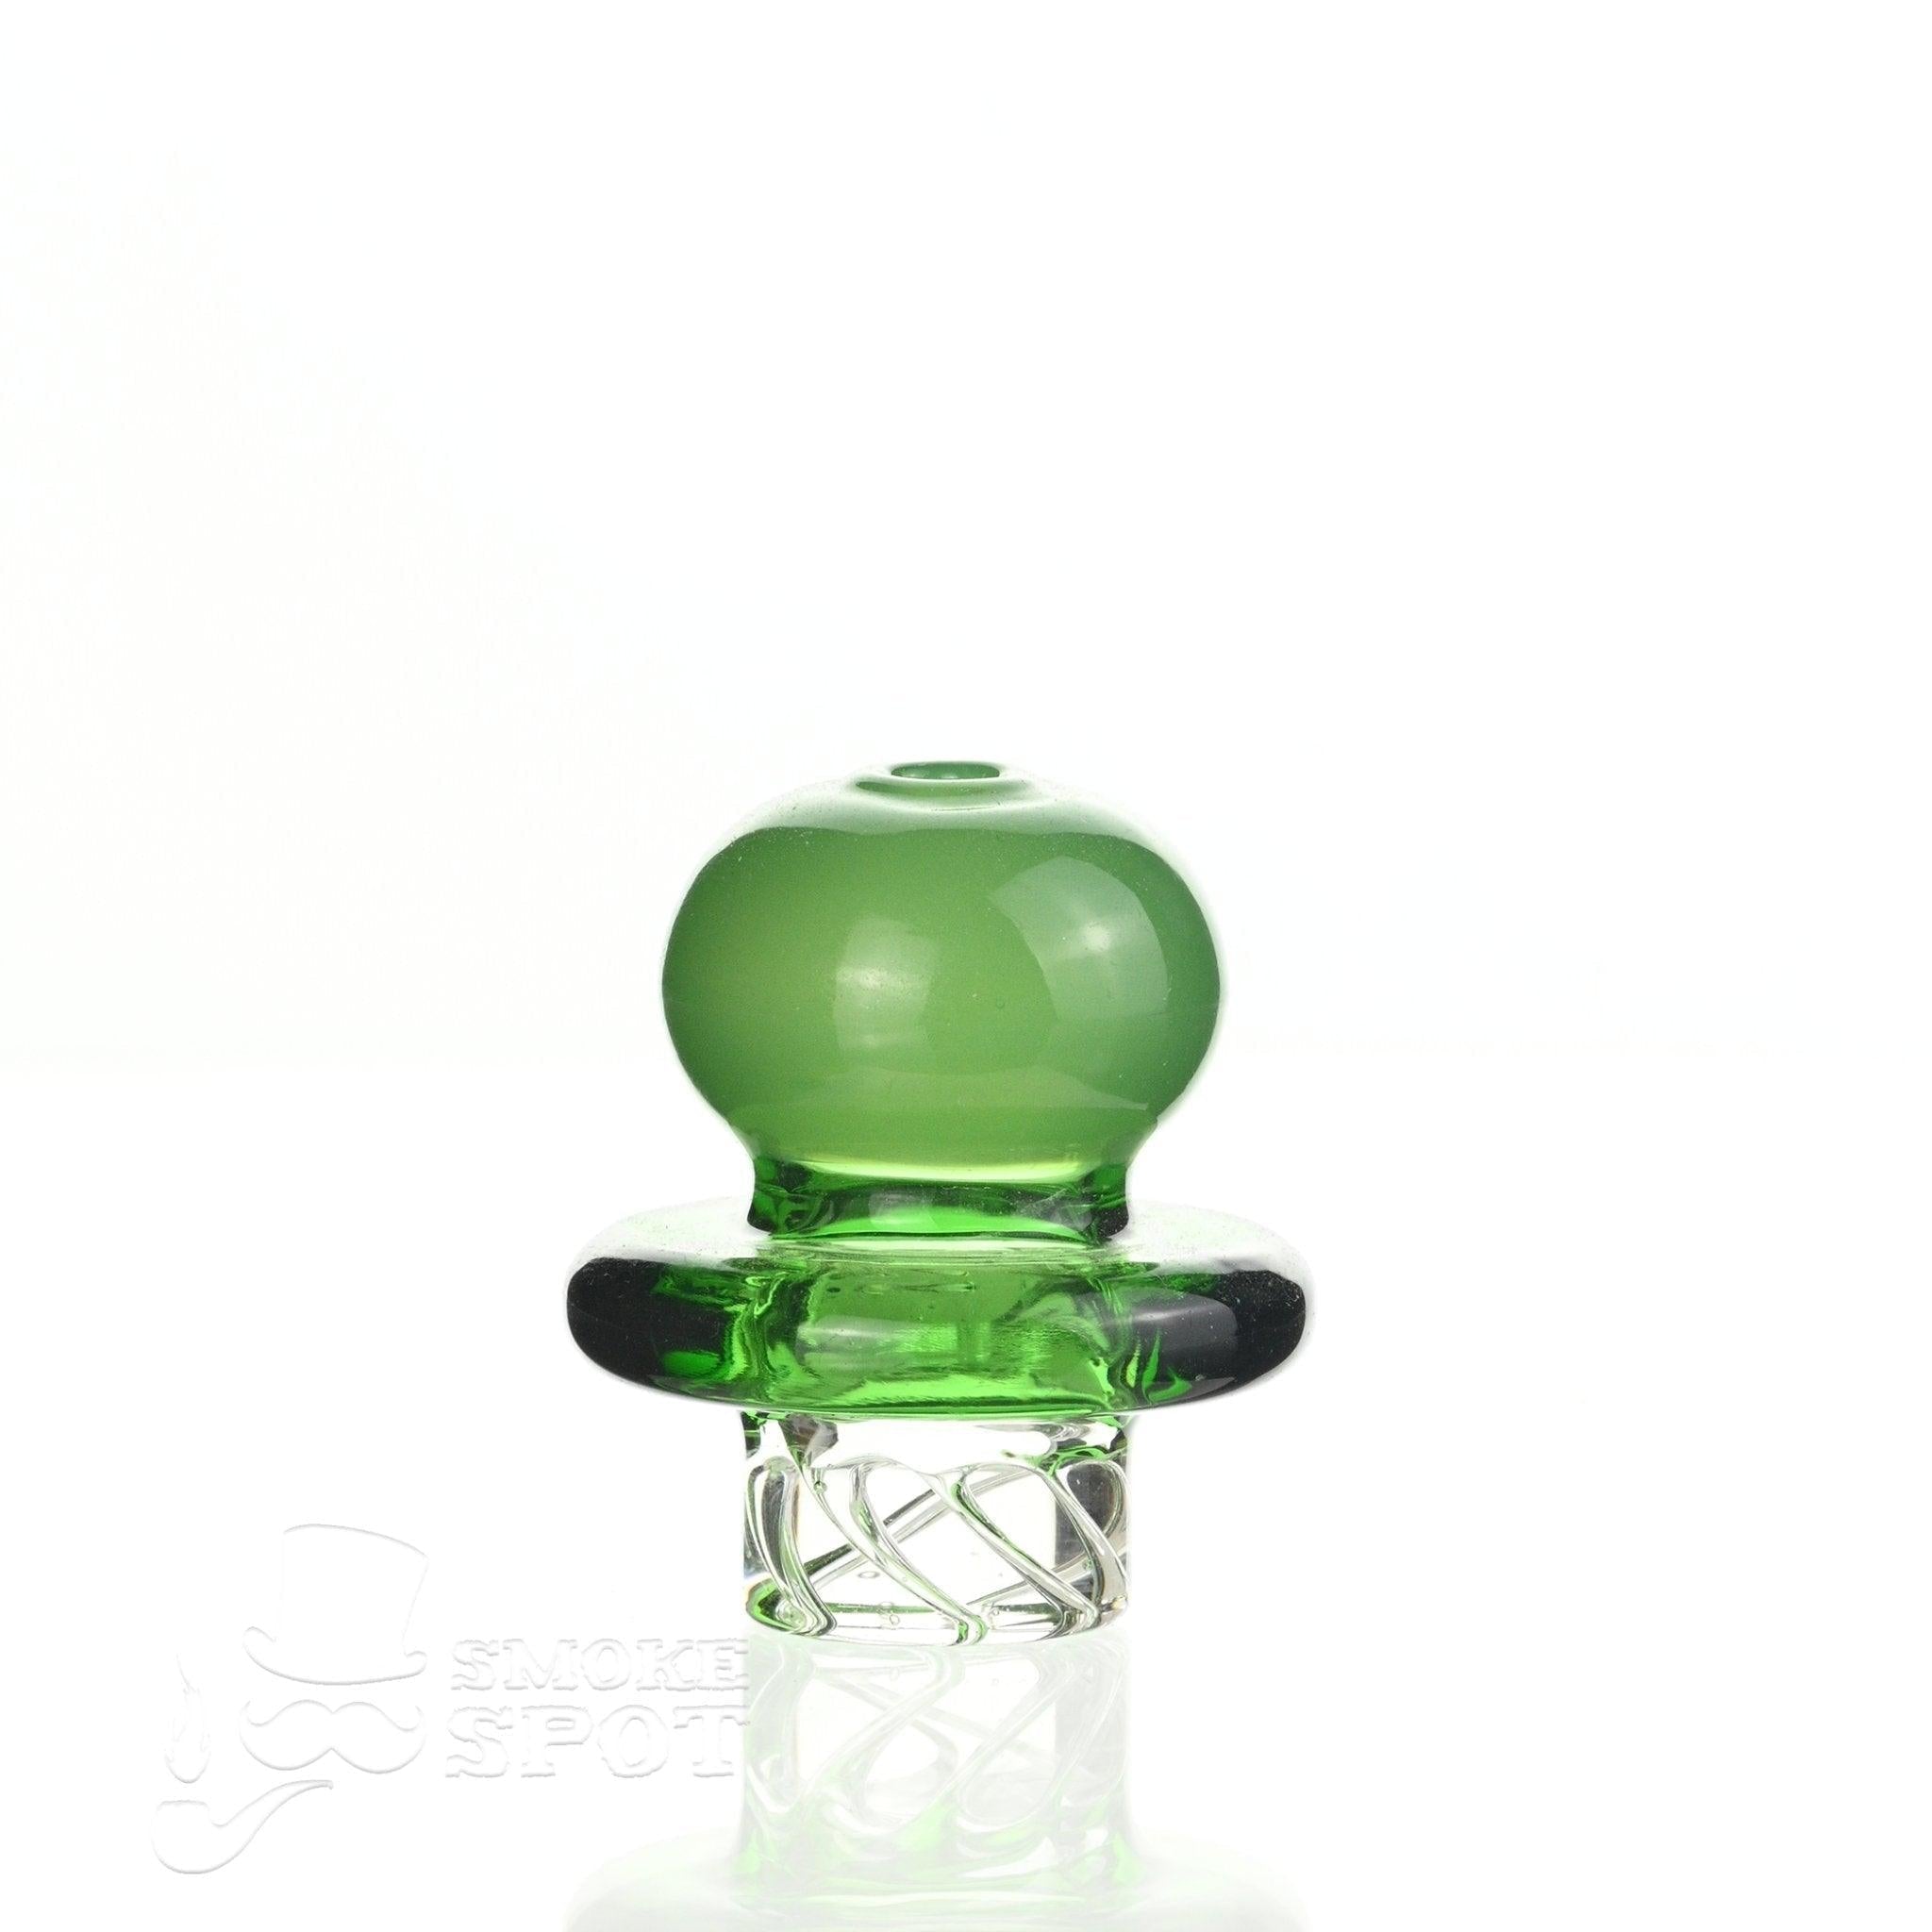 afm ball spinner cap green - SSSS